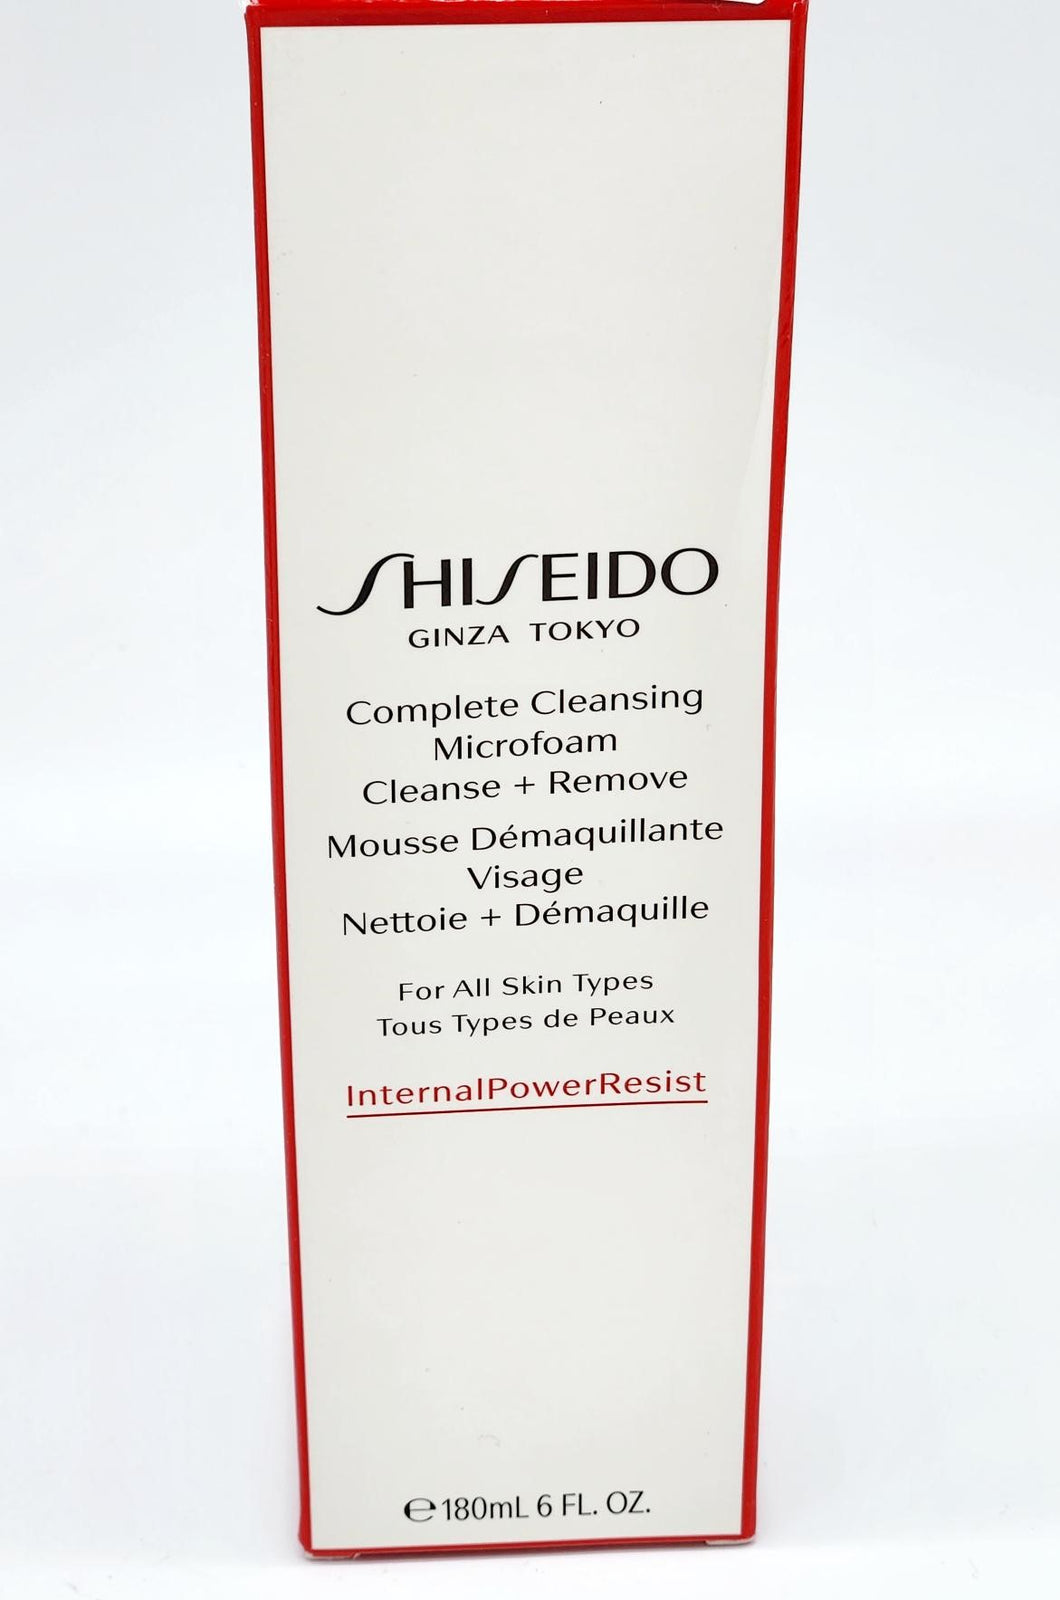 Shiseido Complete Cleansing Microfoam 180 mL